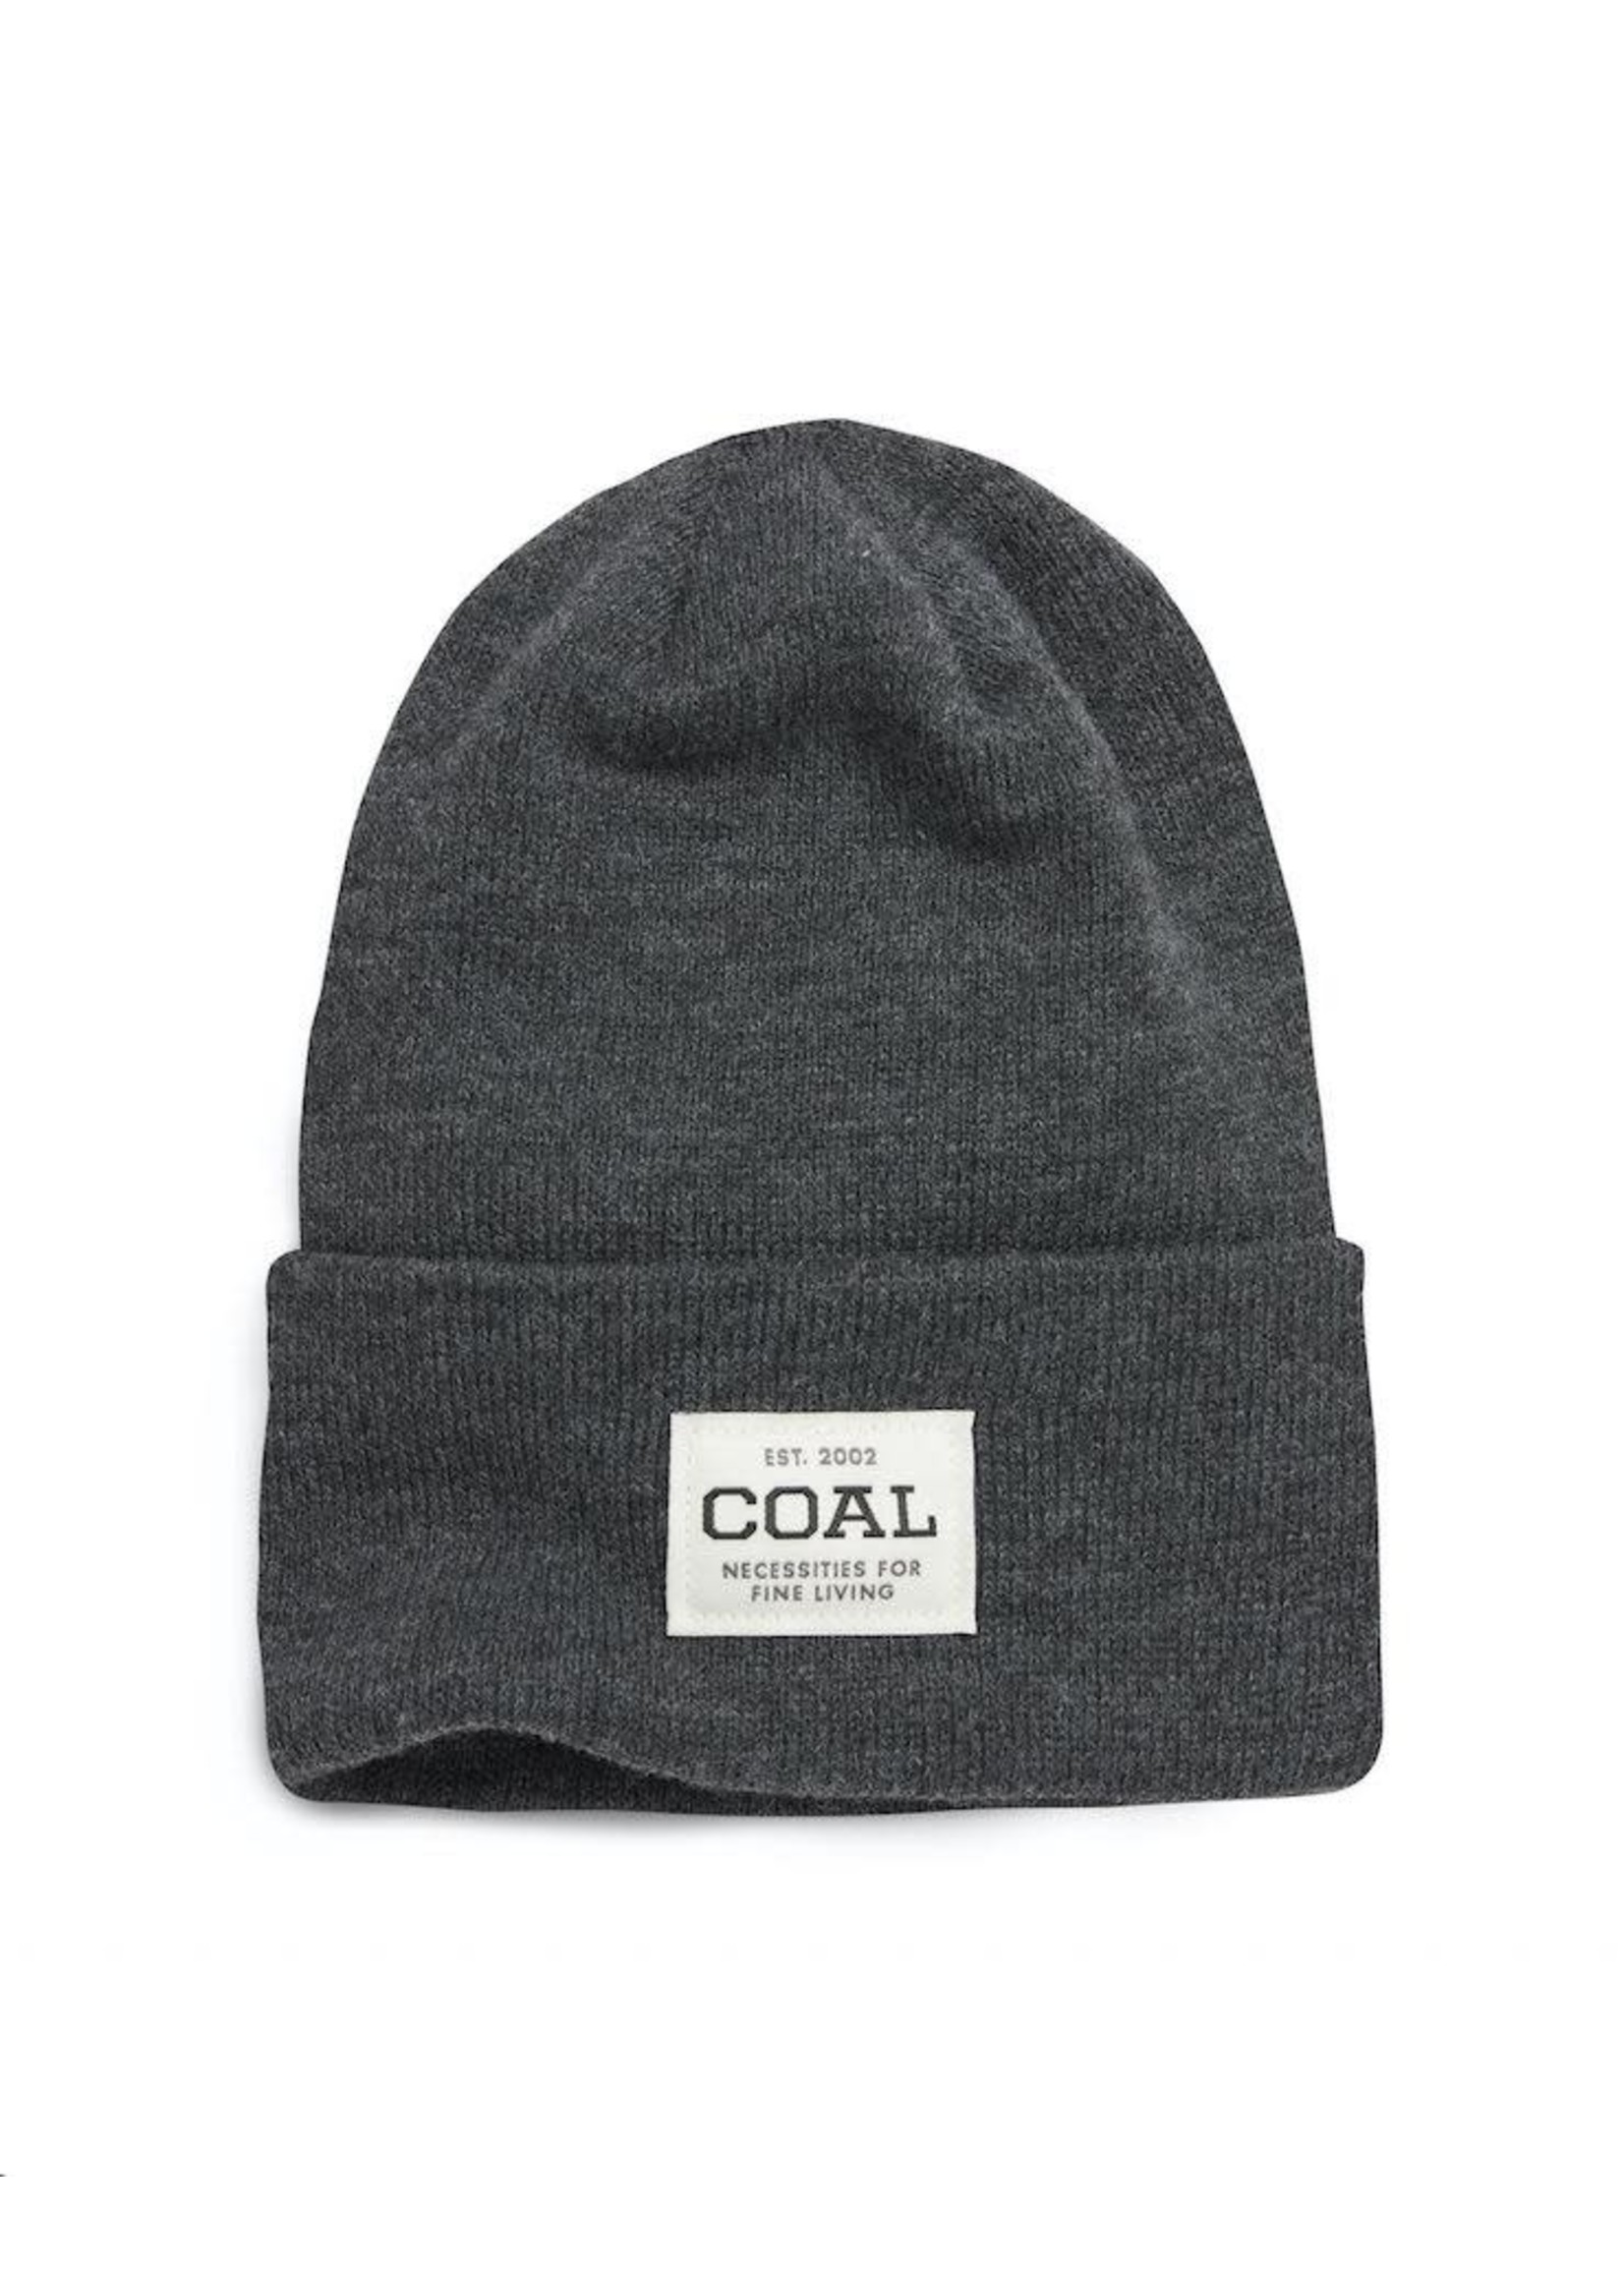 Coal Coal Headwear, The Uniform Knit Cuff Beanie in Charcoal